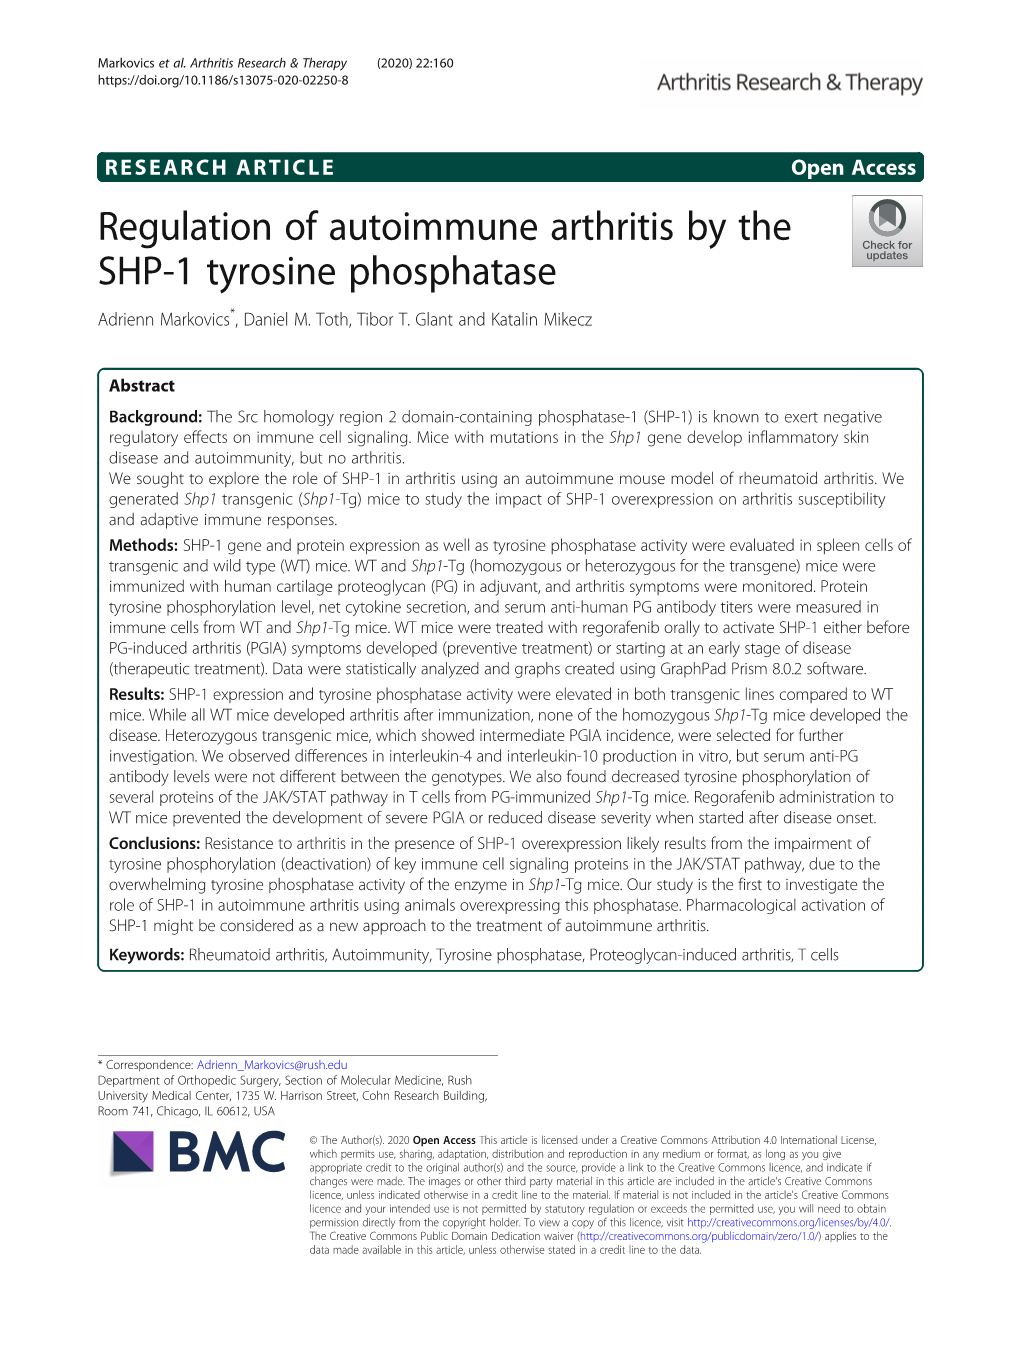 Regulation of Autoimmune Arthritis by the SHP-1 Tyrosine Phosphatase Adrienn Markovics*, Daniel M